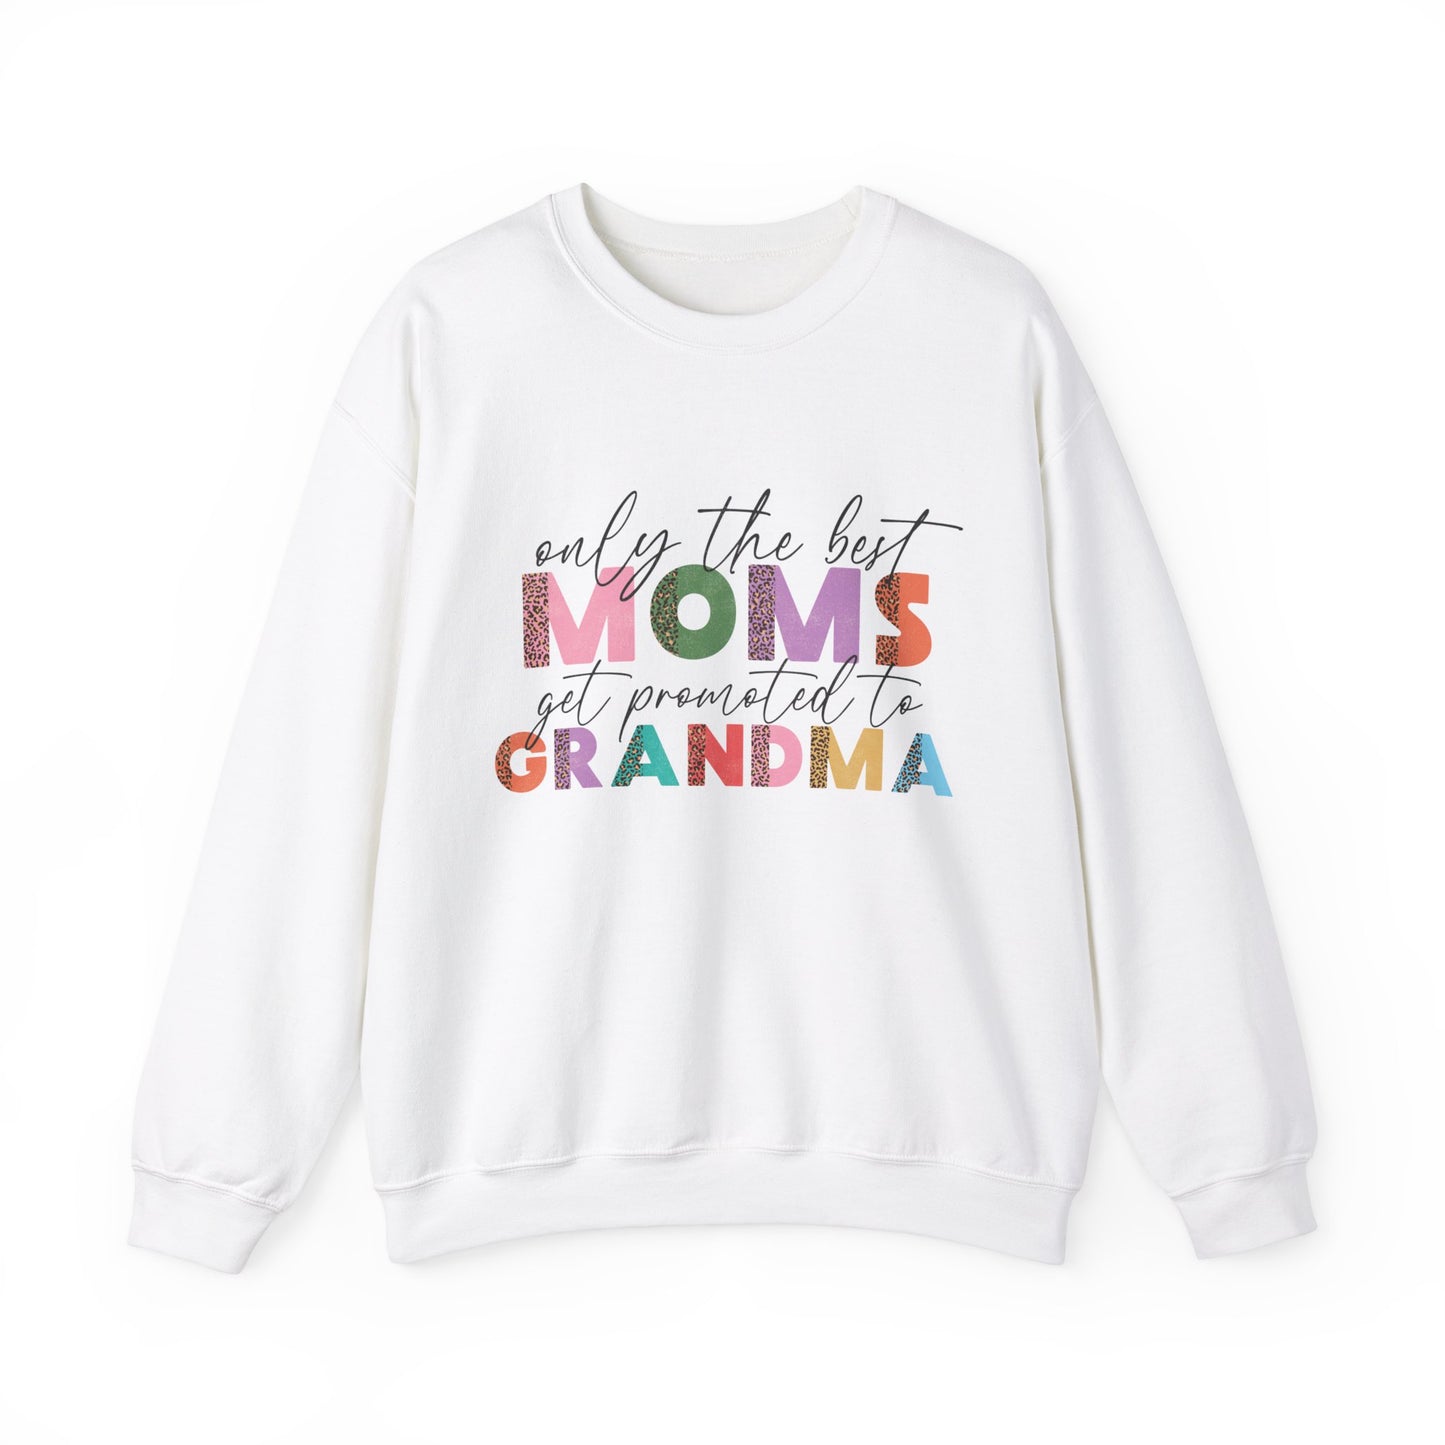 Promoted to Grandma Women's Sweatshirt